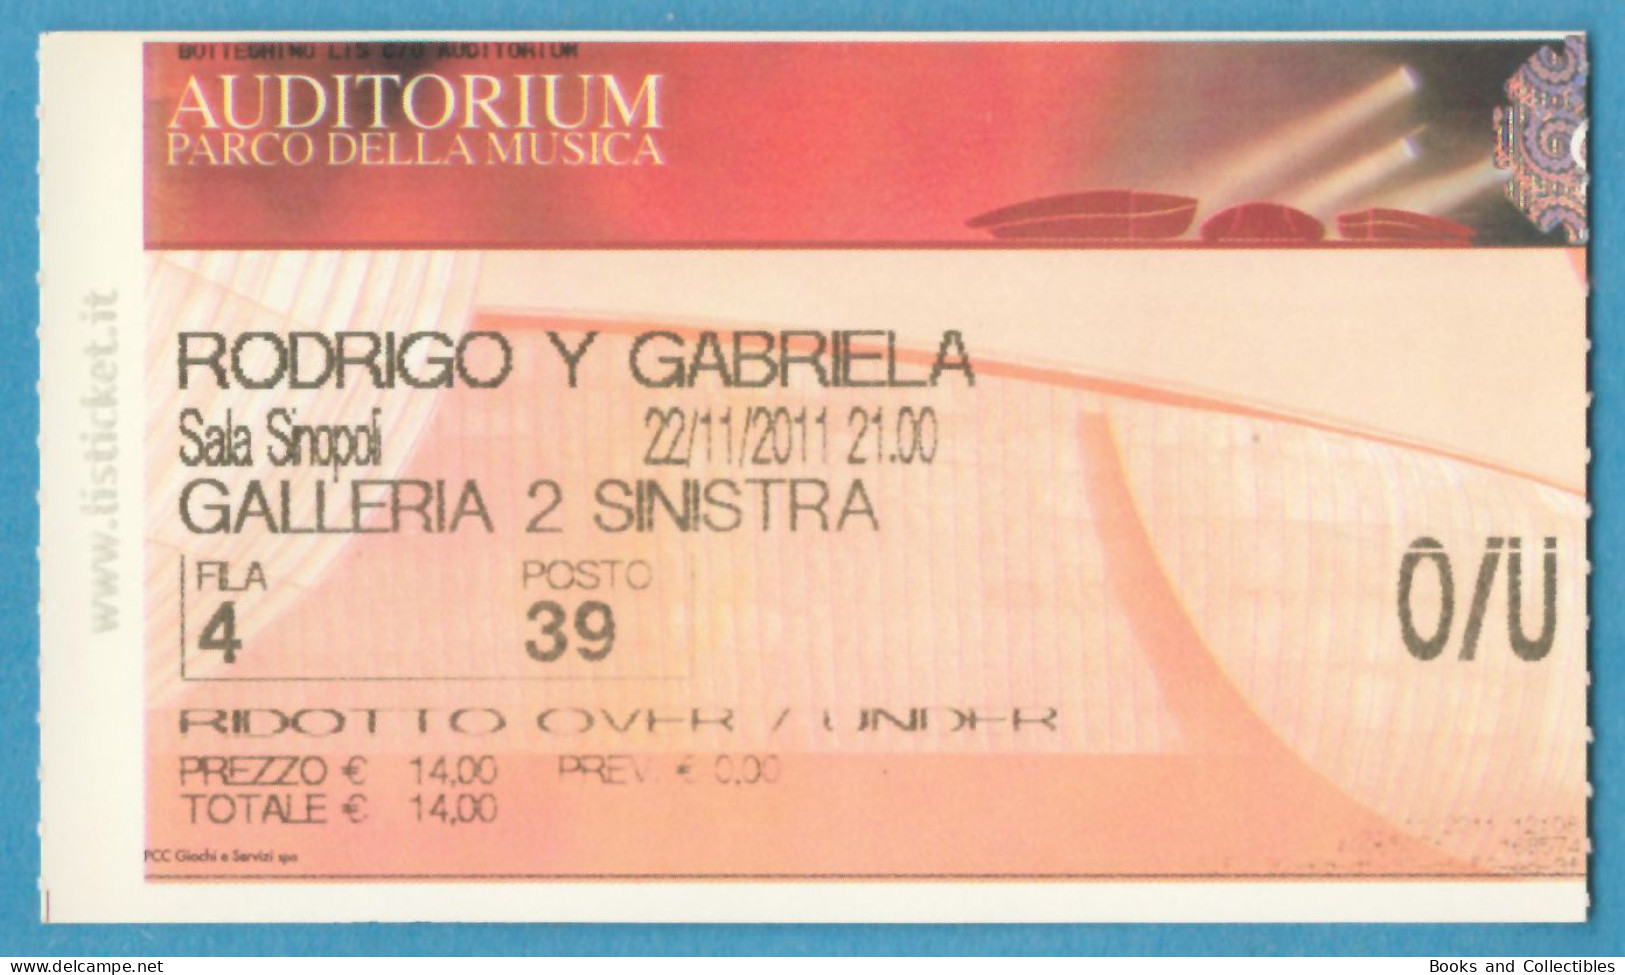 Q-4500 * RODRIGO Y GABRIELA - Auditorium Parco Delle Musica, Roma (Italy) - 22 Novembre 2011 - Tickets De Concerts